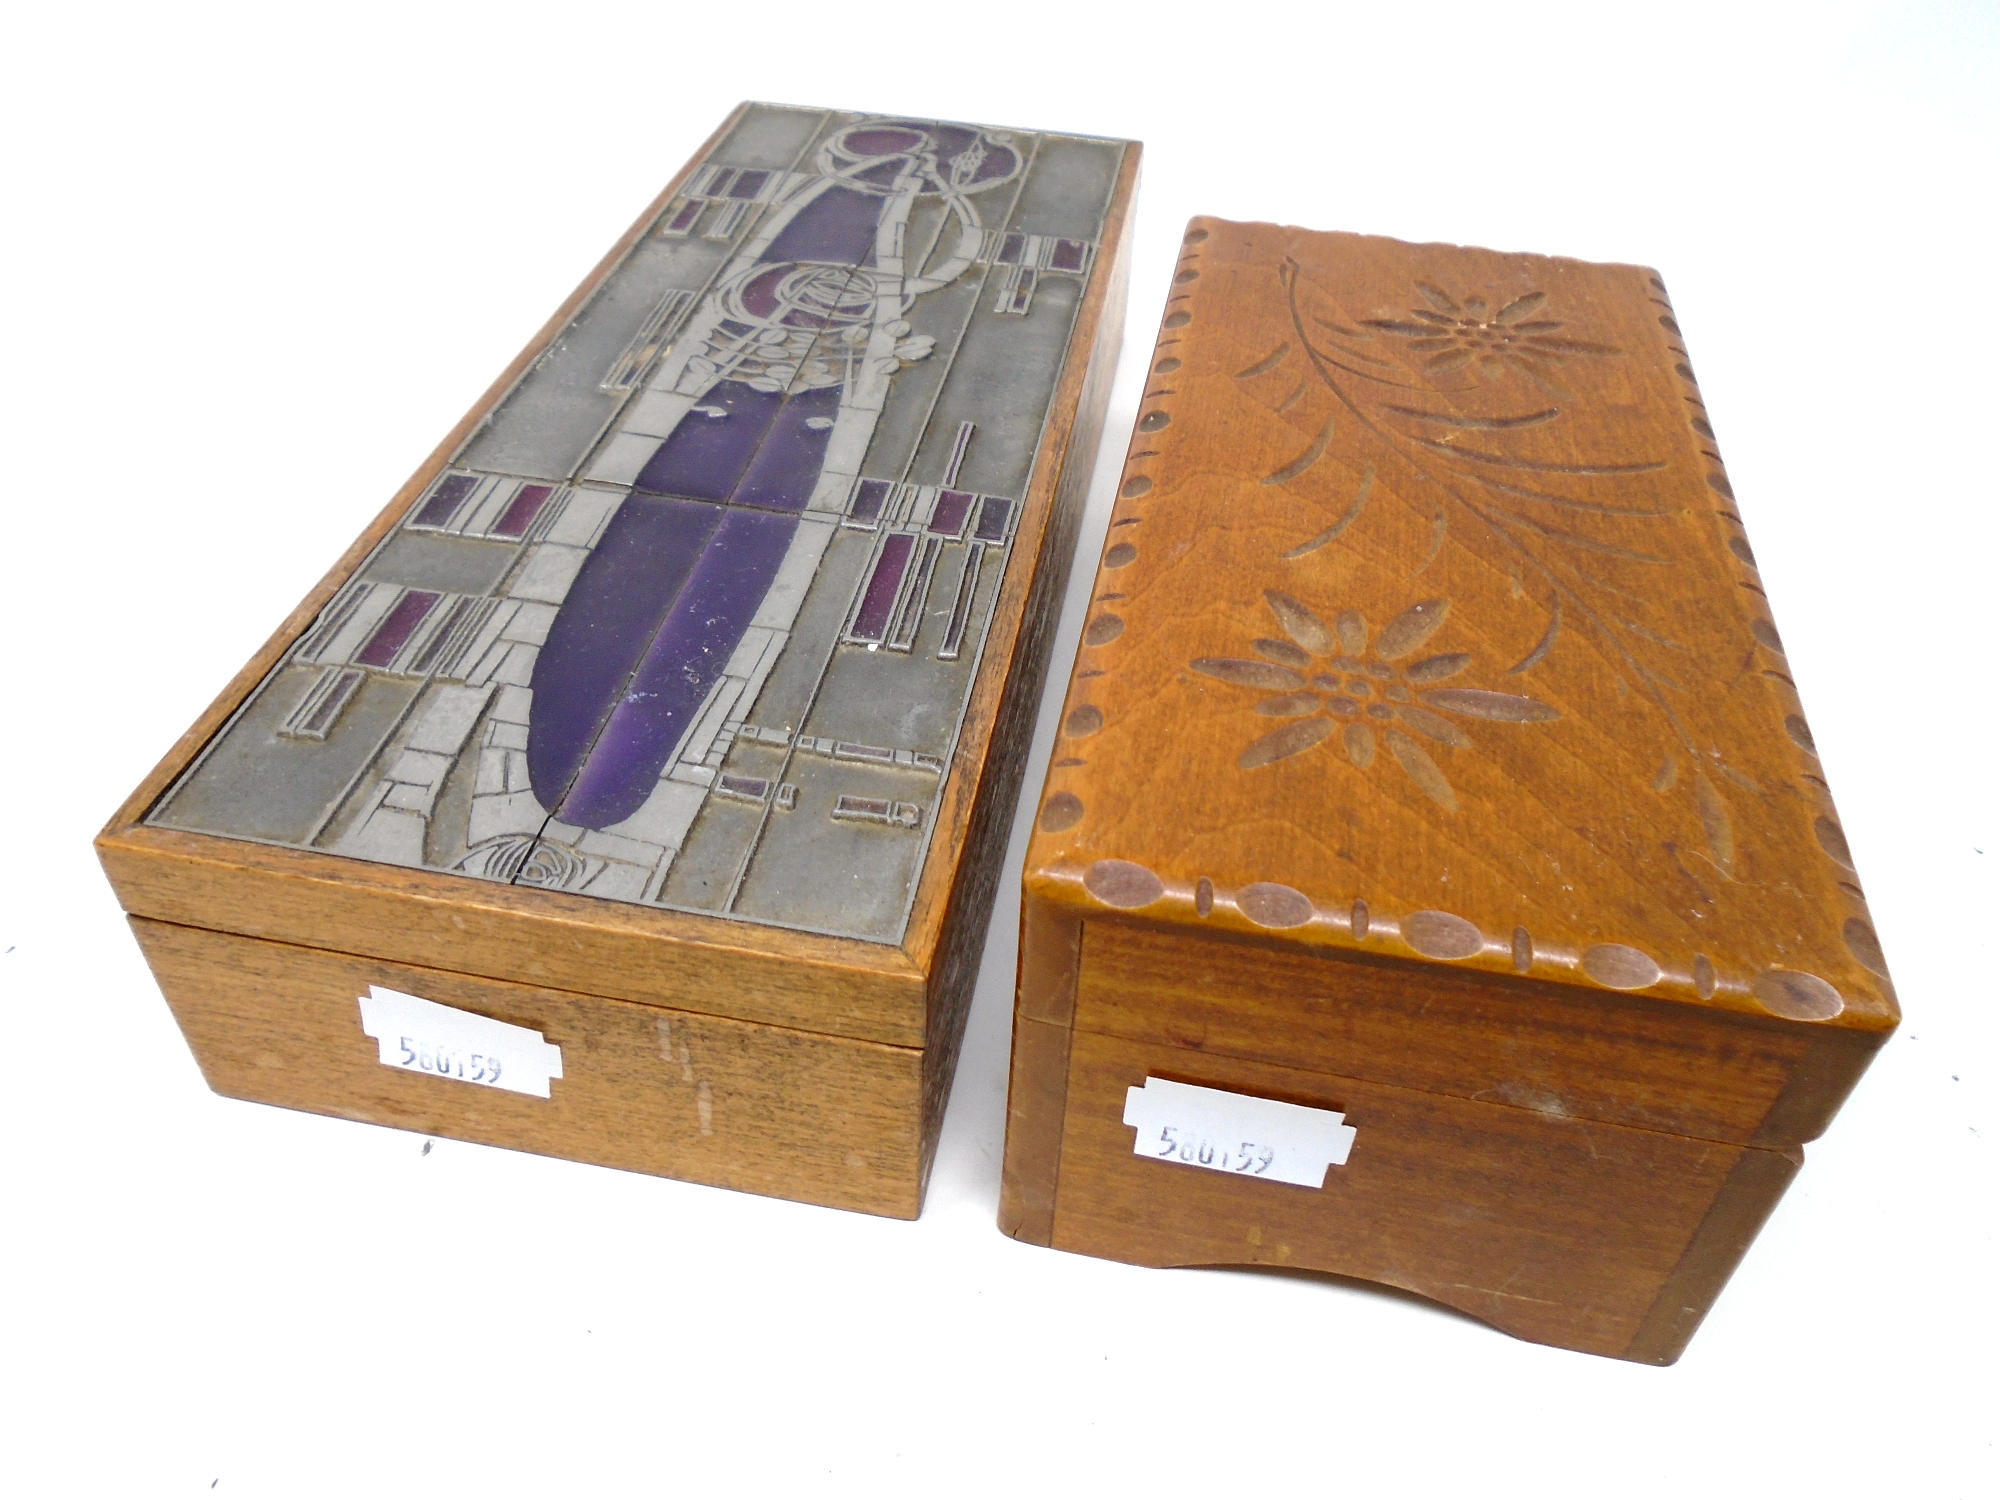 A Charles Rennie Mackintosh design trinket box together with a further musical trinket box.